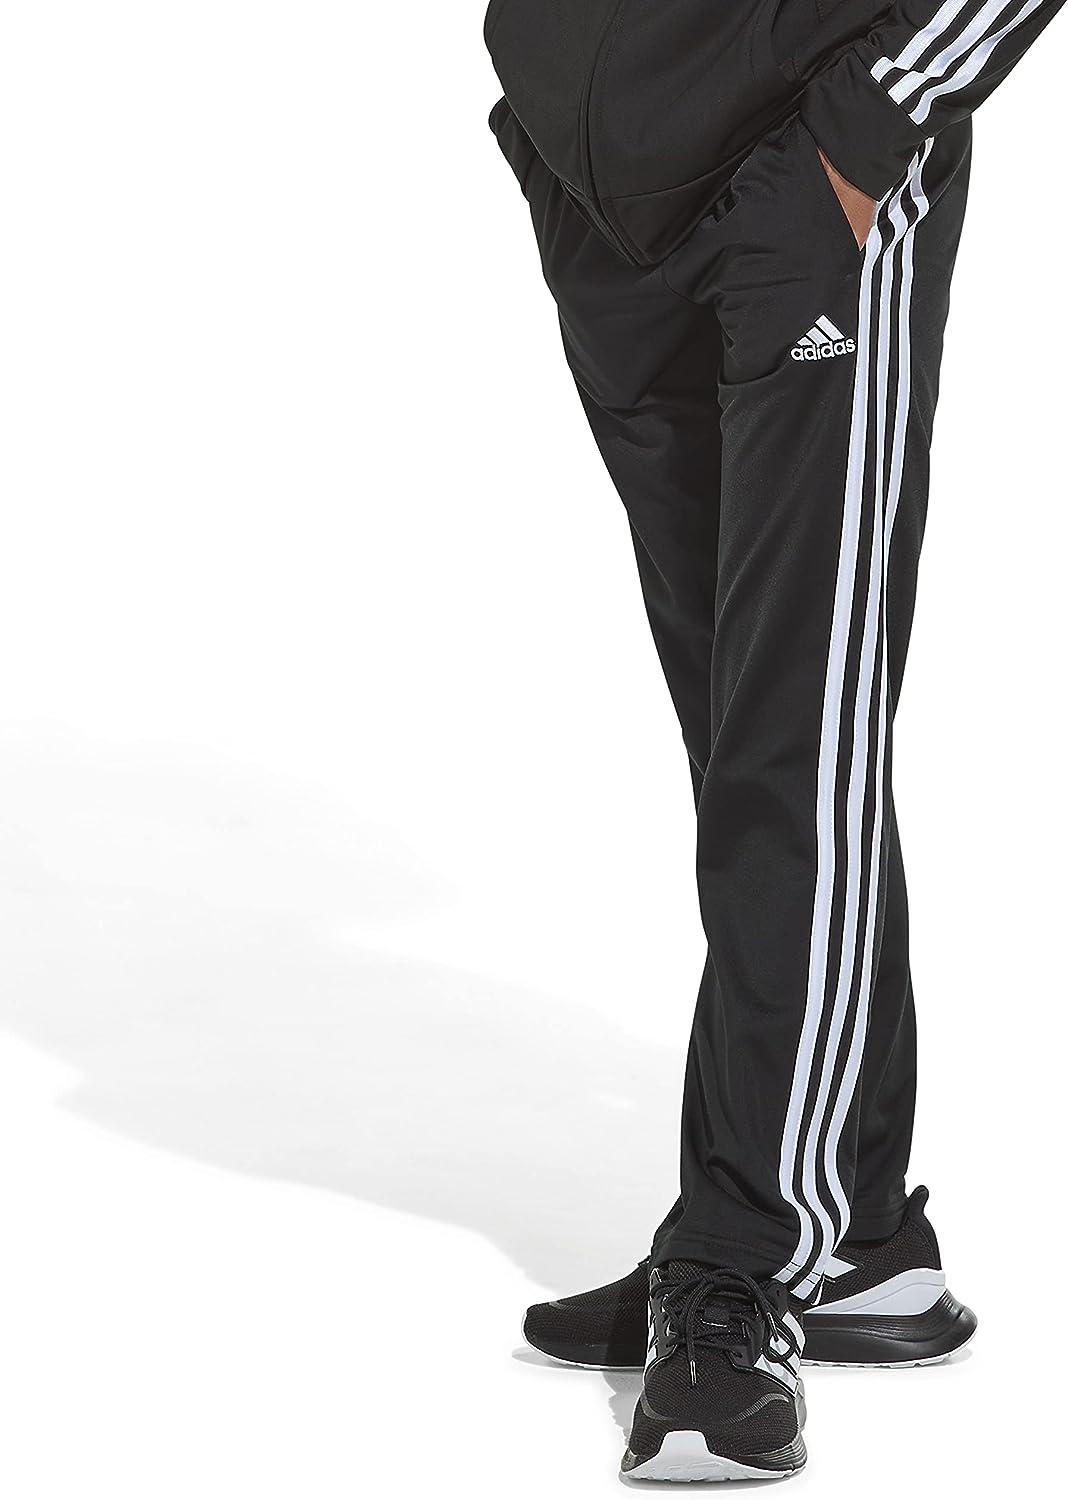 Adidas Iconic Tricot Joggers, Boys XL 18-20, Black w White Stripe, AK5645 |  Clothes design, Joggers, Tricot